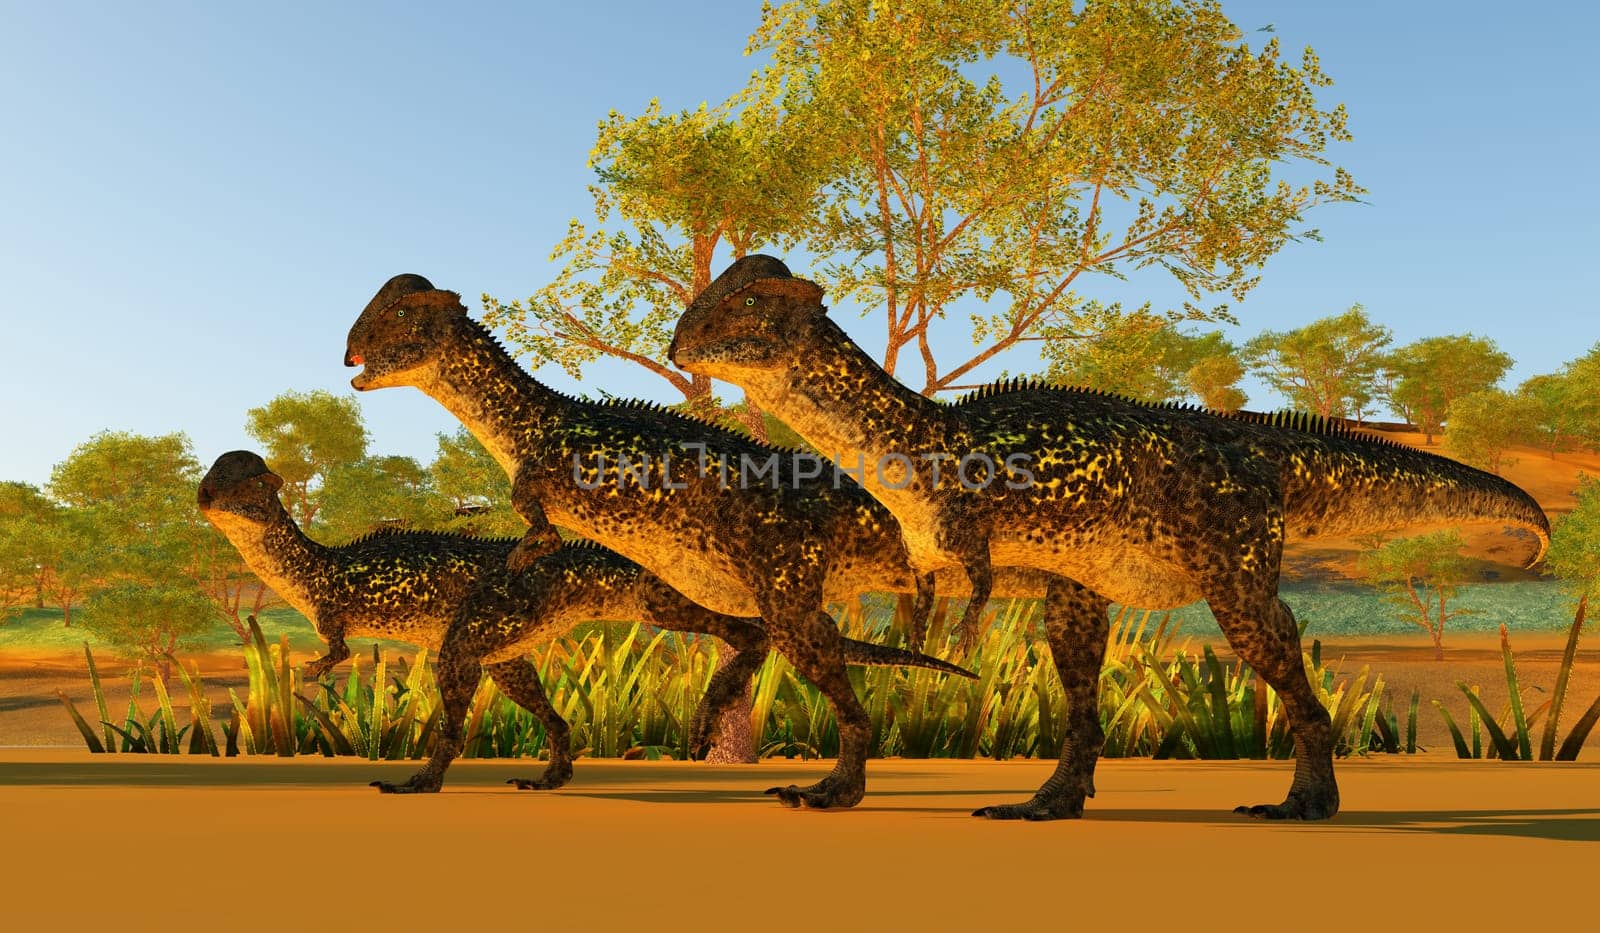 Stegoceras Dinosaurs by Catmando